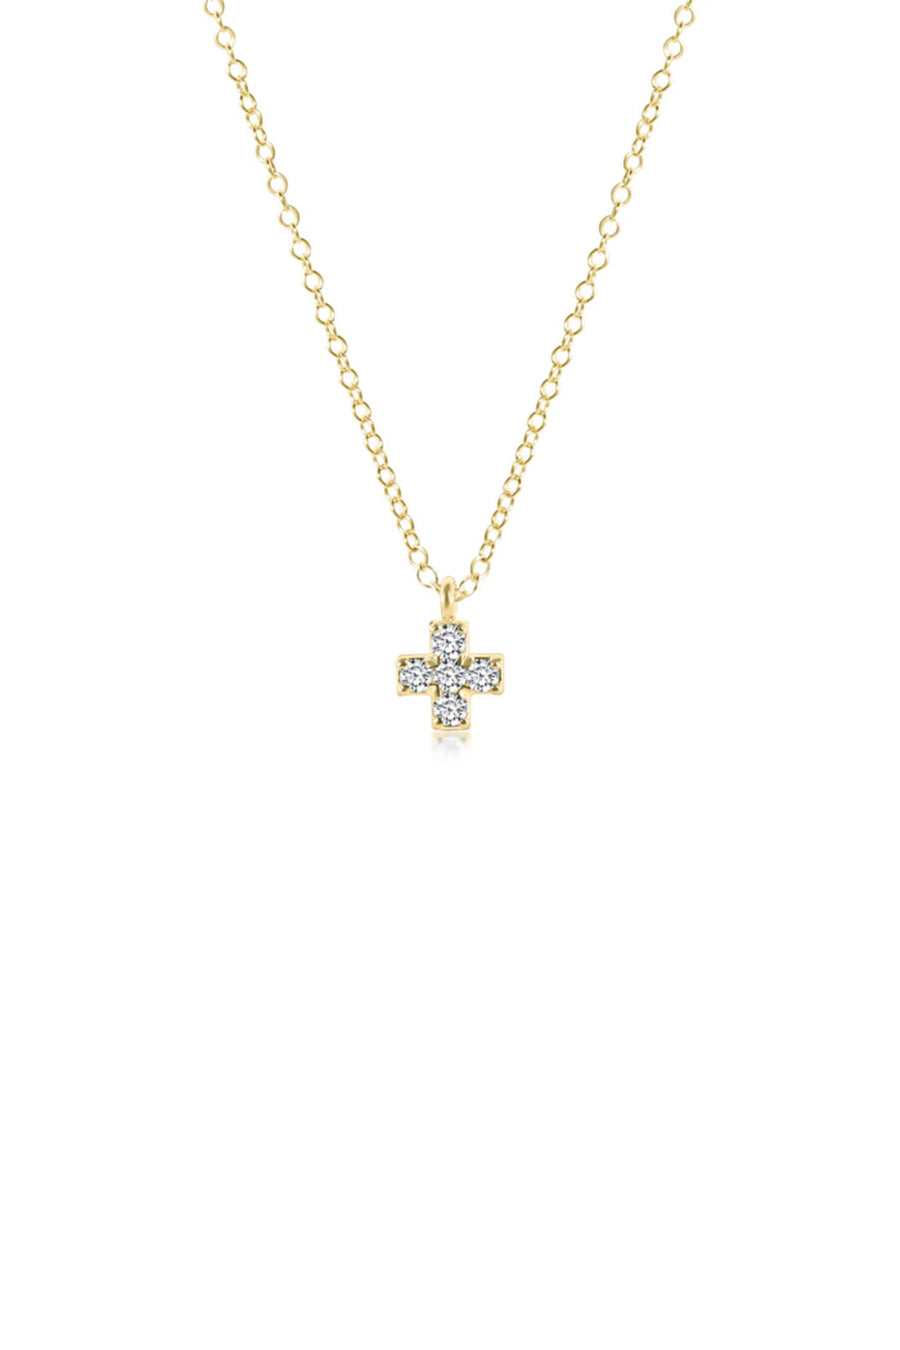 ENewton 14k Gold and Diamond Signature Cross Necklace